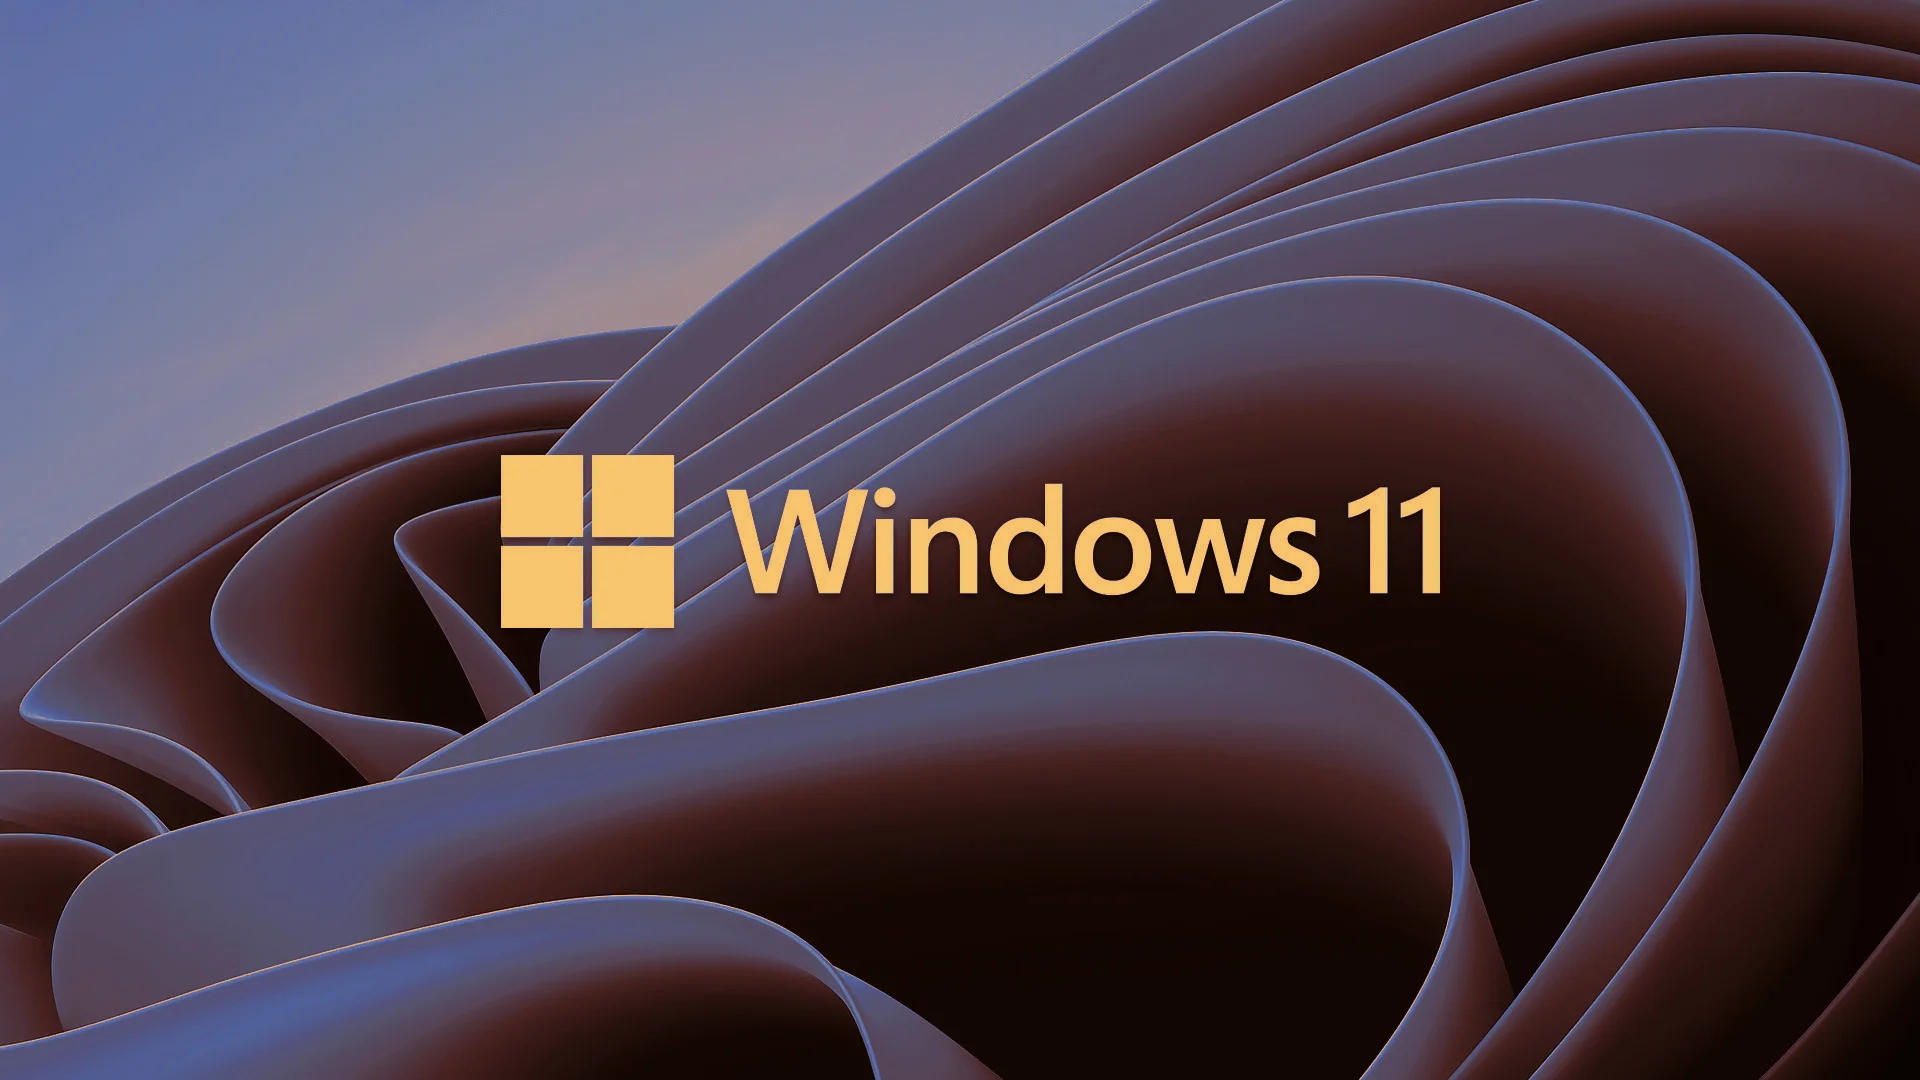 Updating Windows 11 is now easier